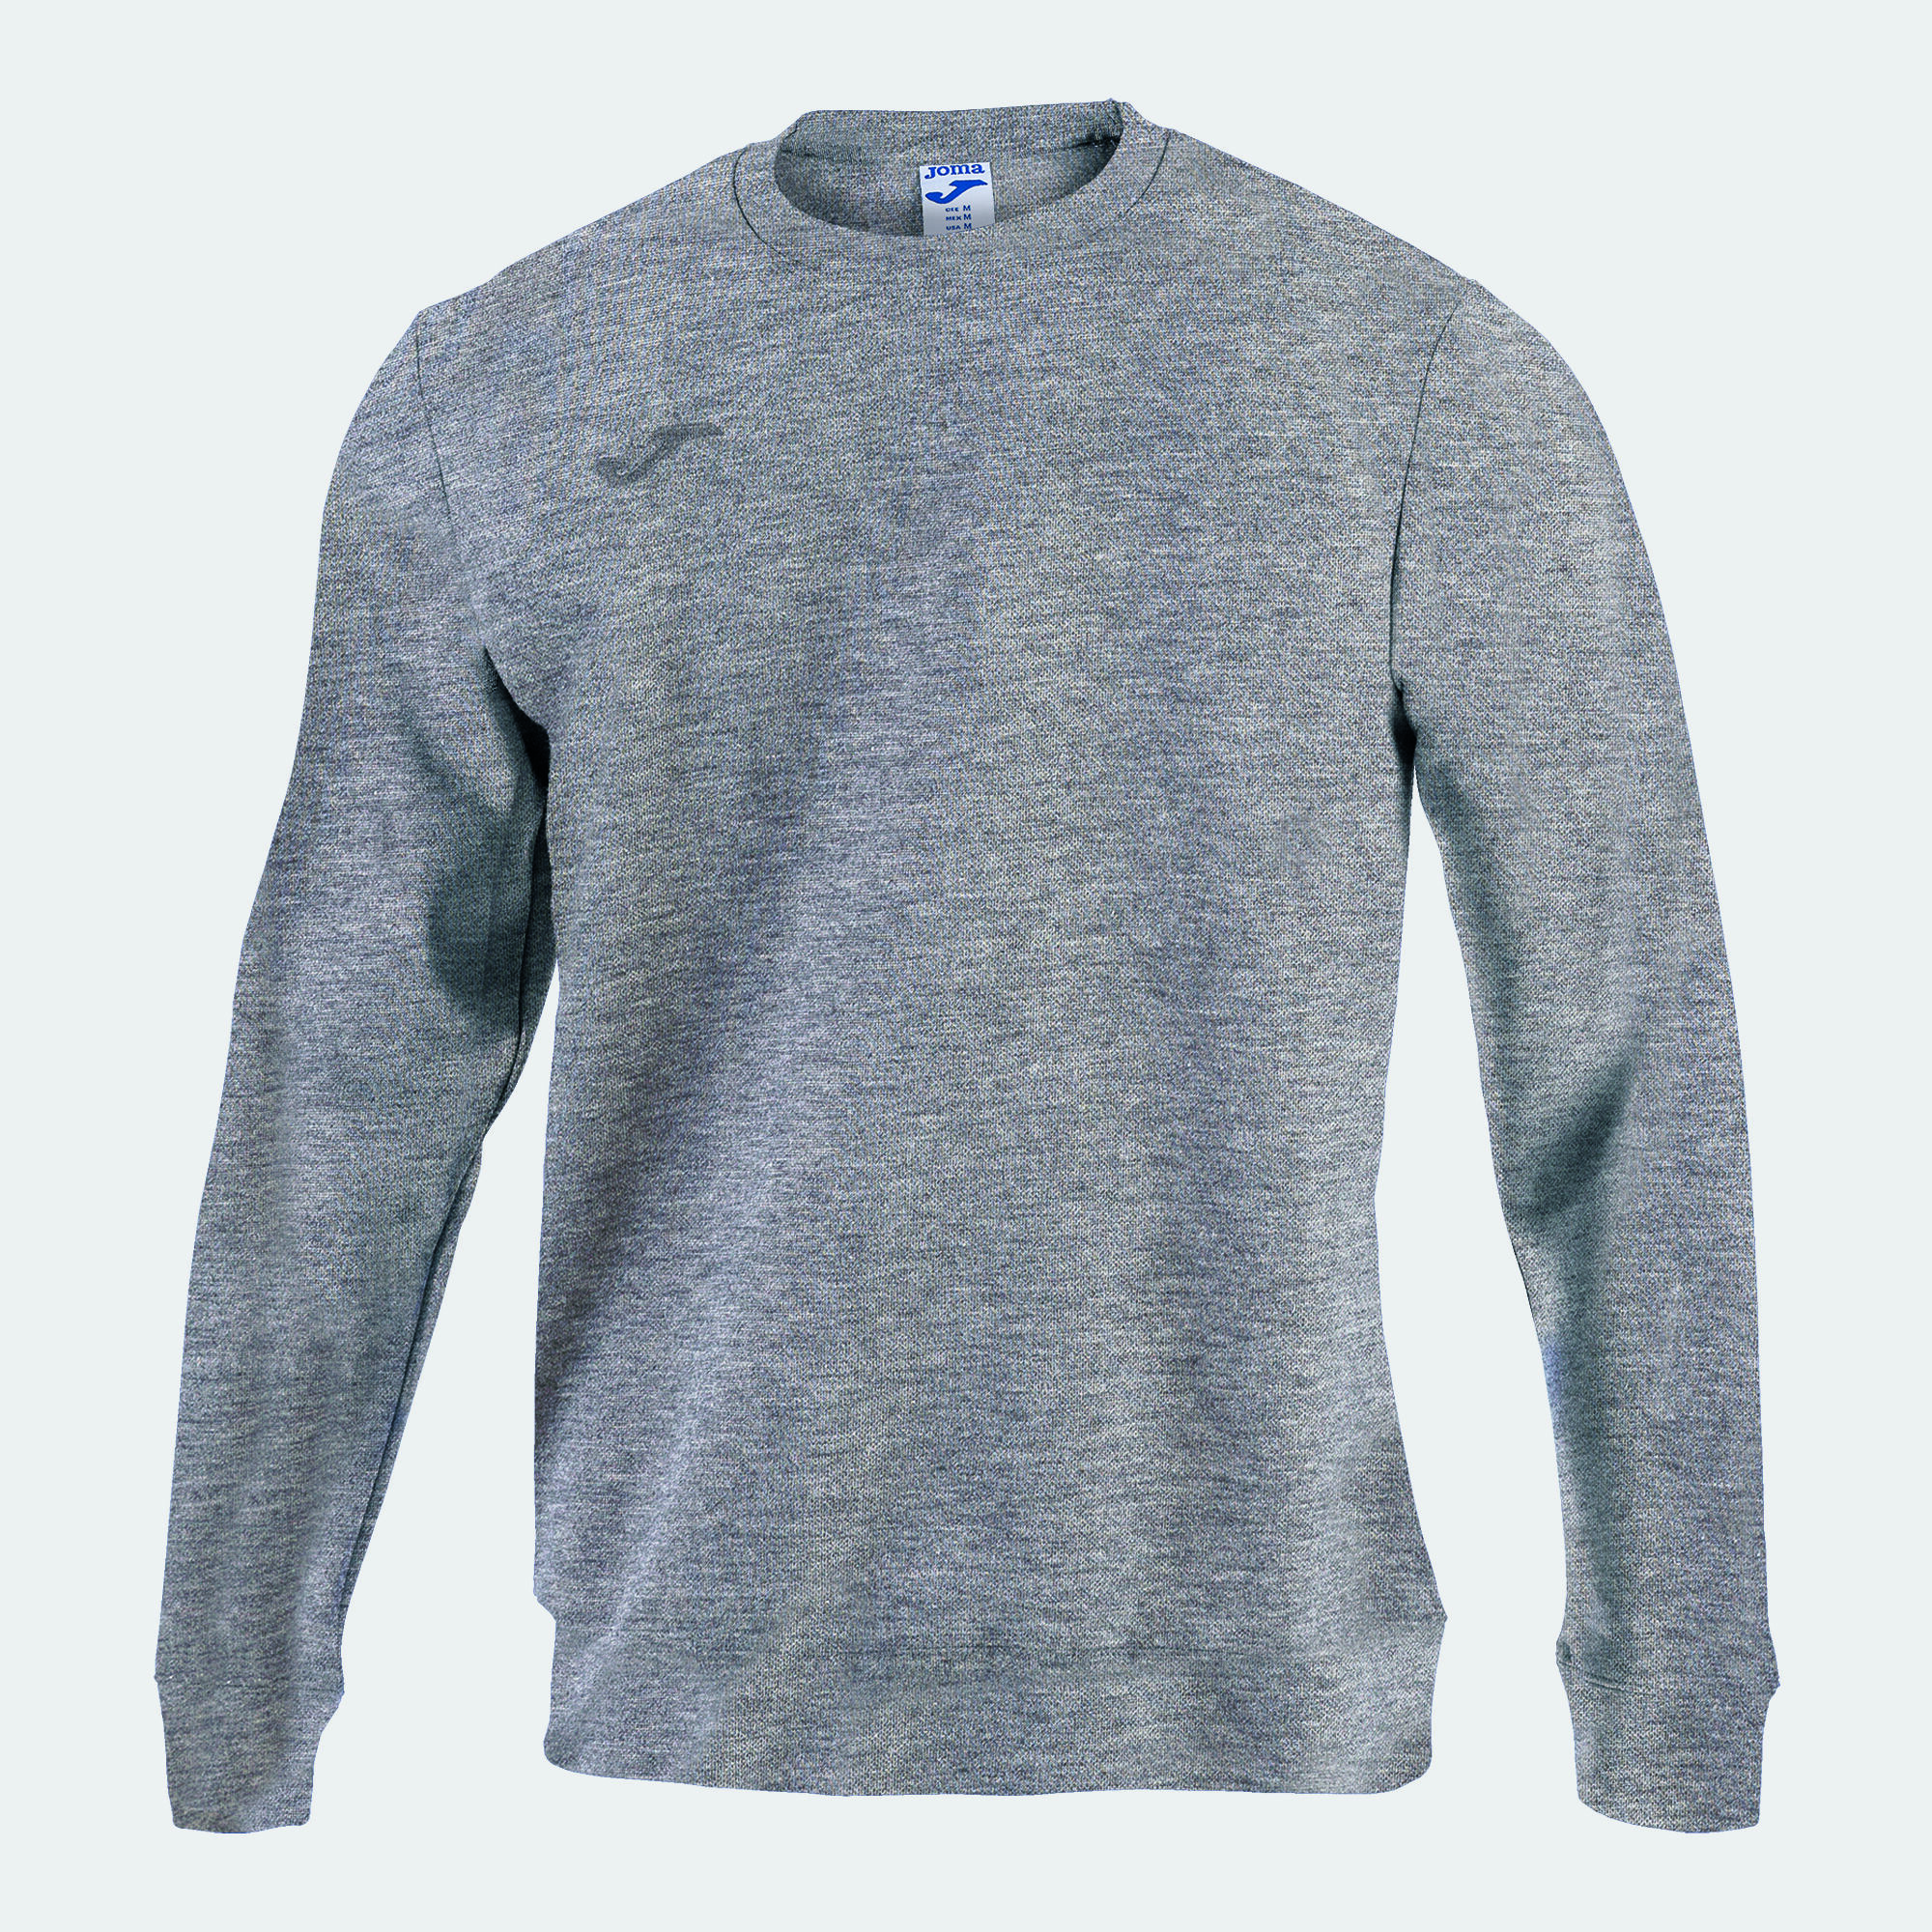 Sweat-shirt homme Santorini gris melange